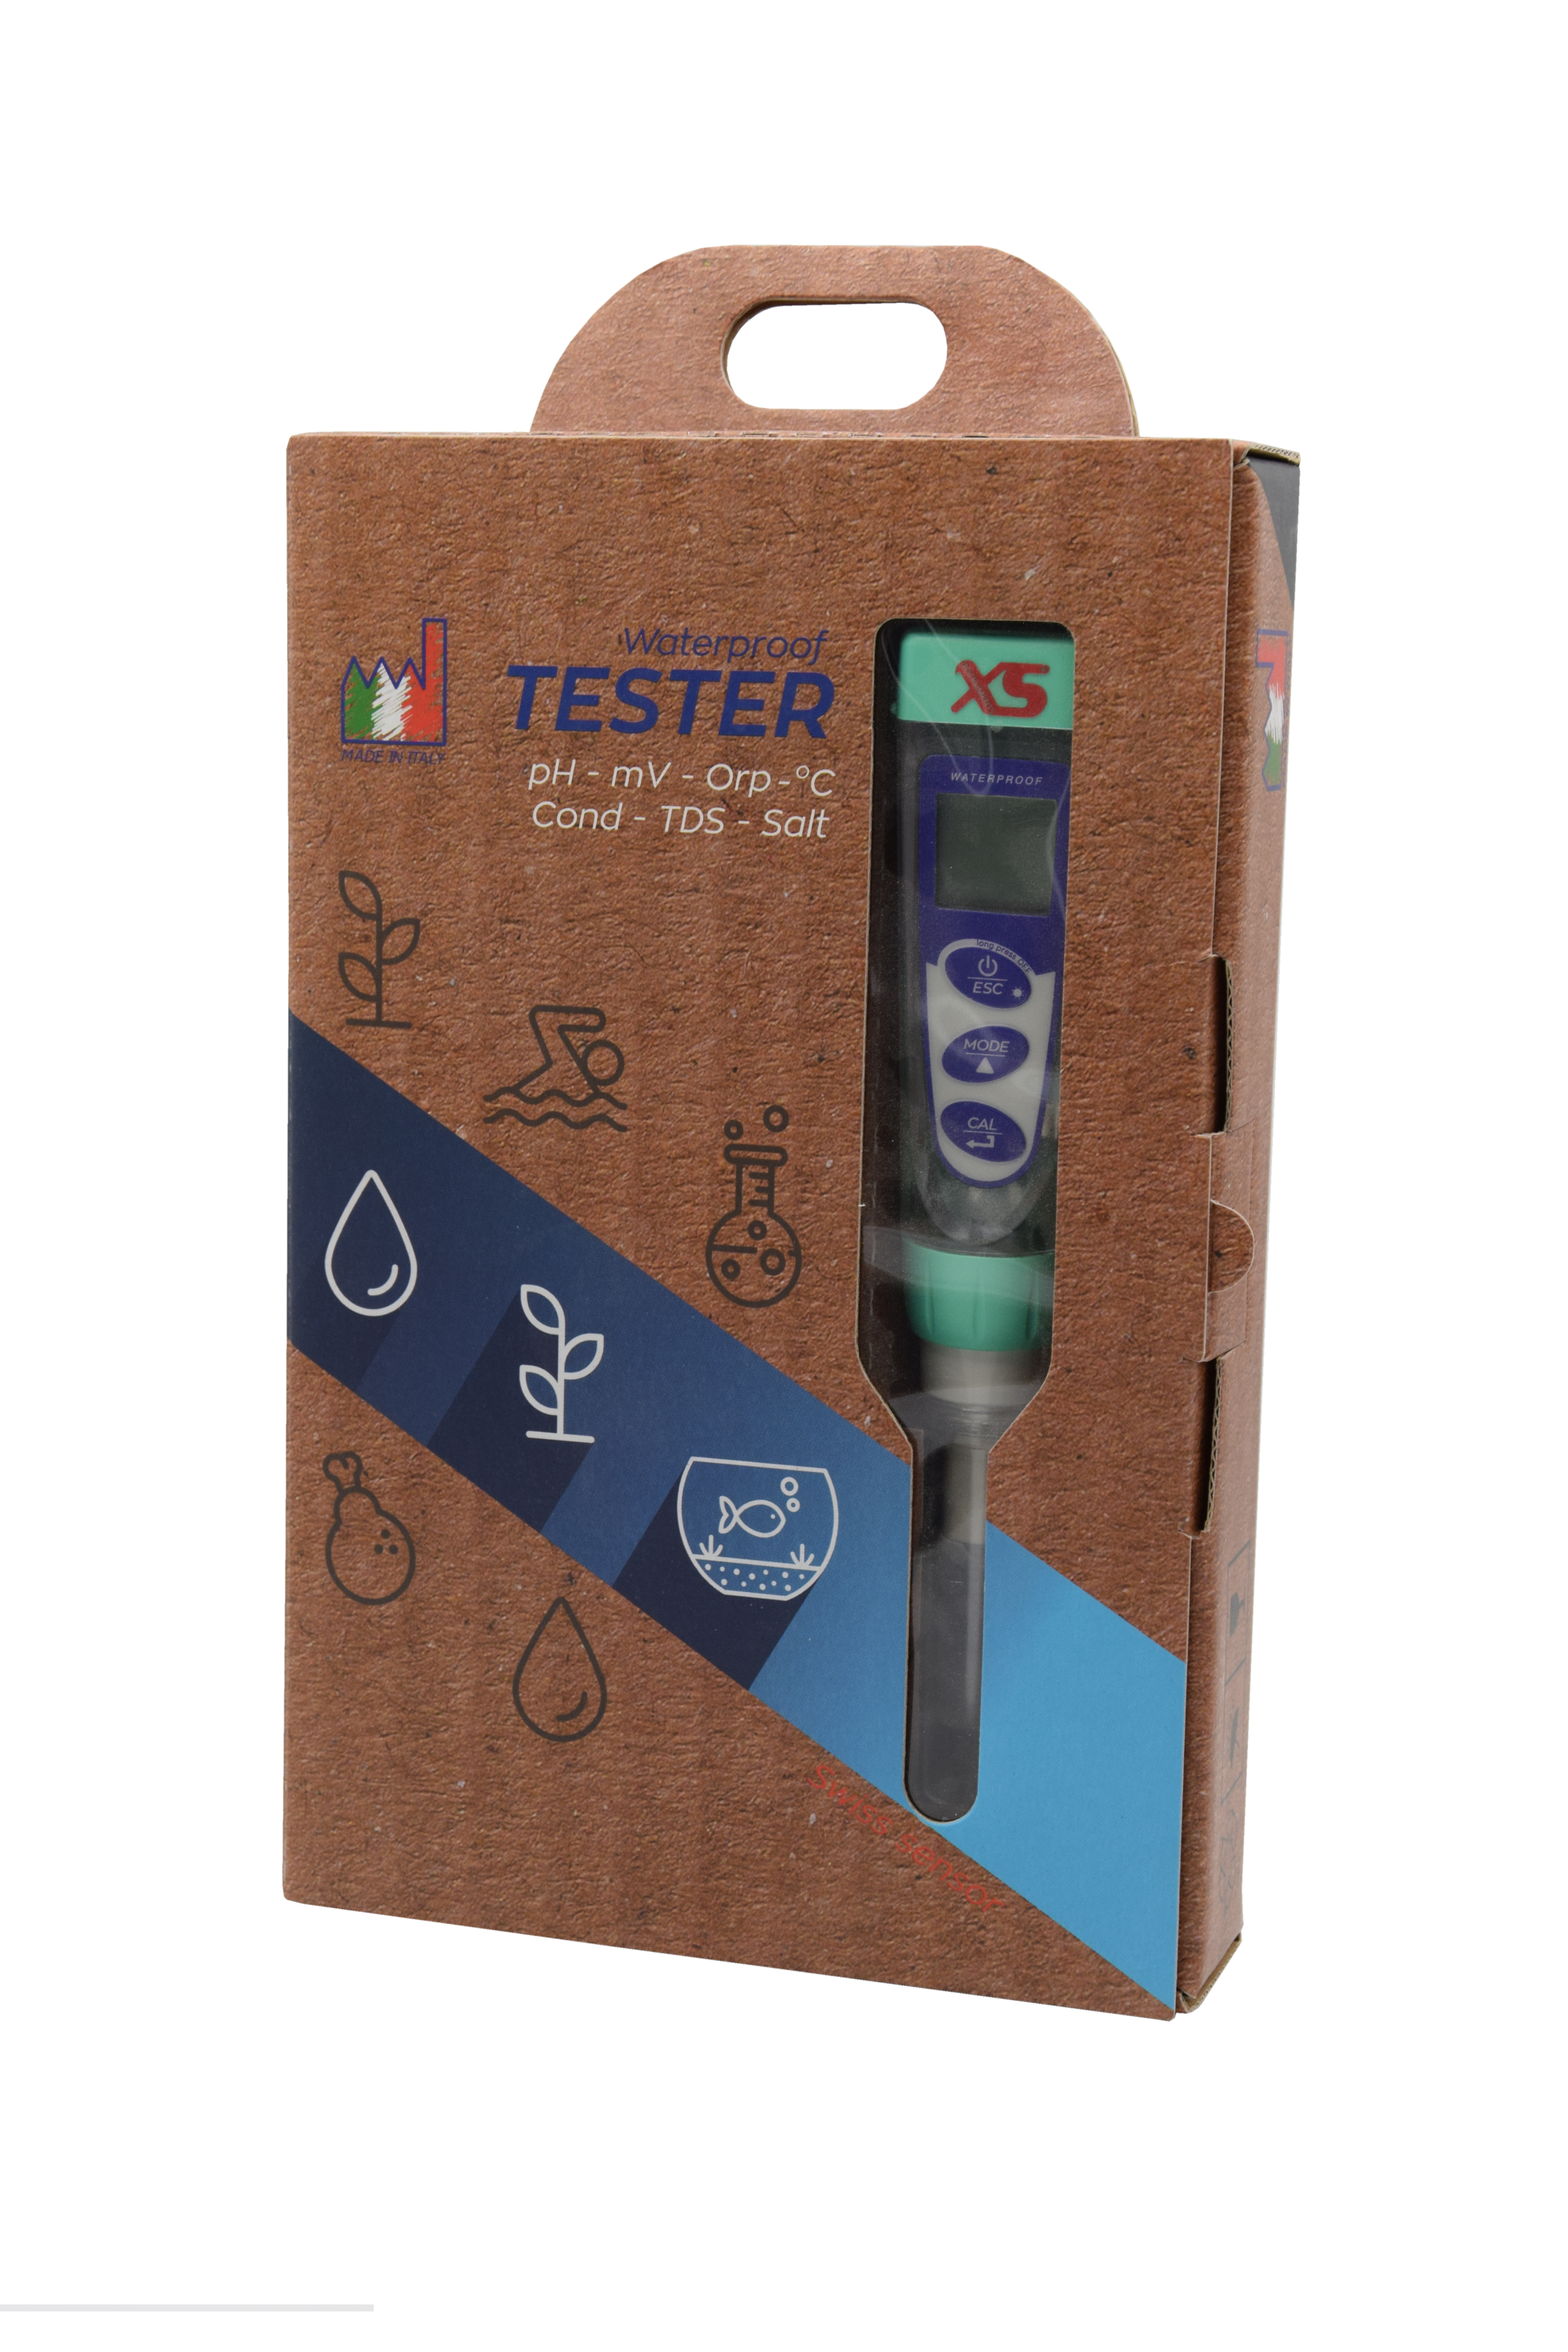 XS pX 4 Tester Kit - pH/Redox/Temperature Pocket Tester 